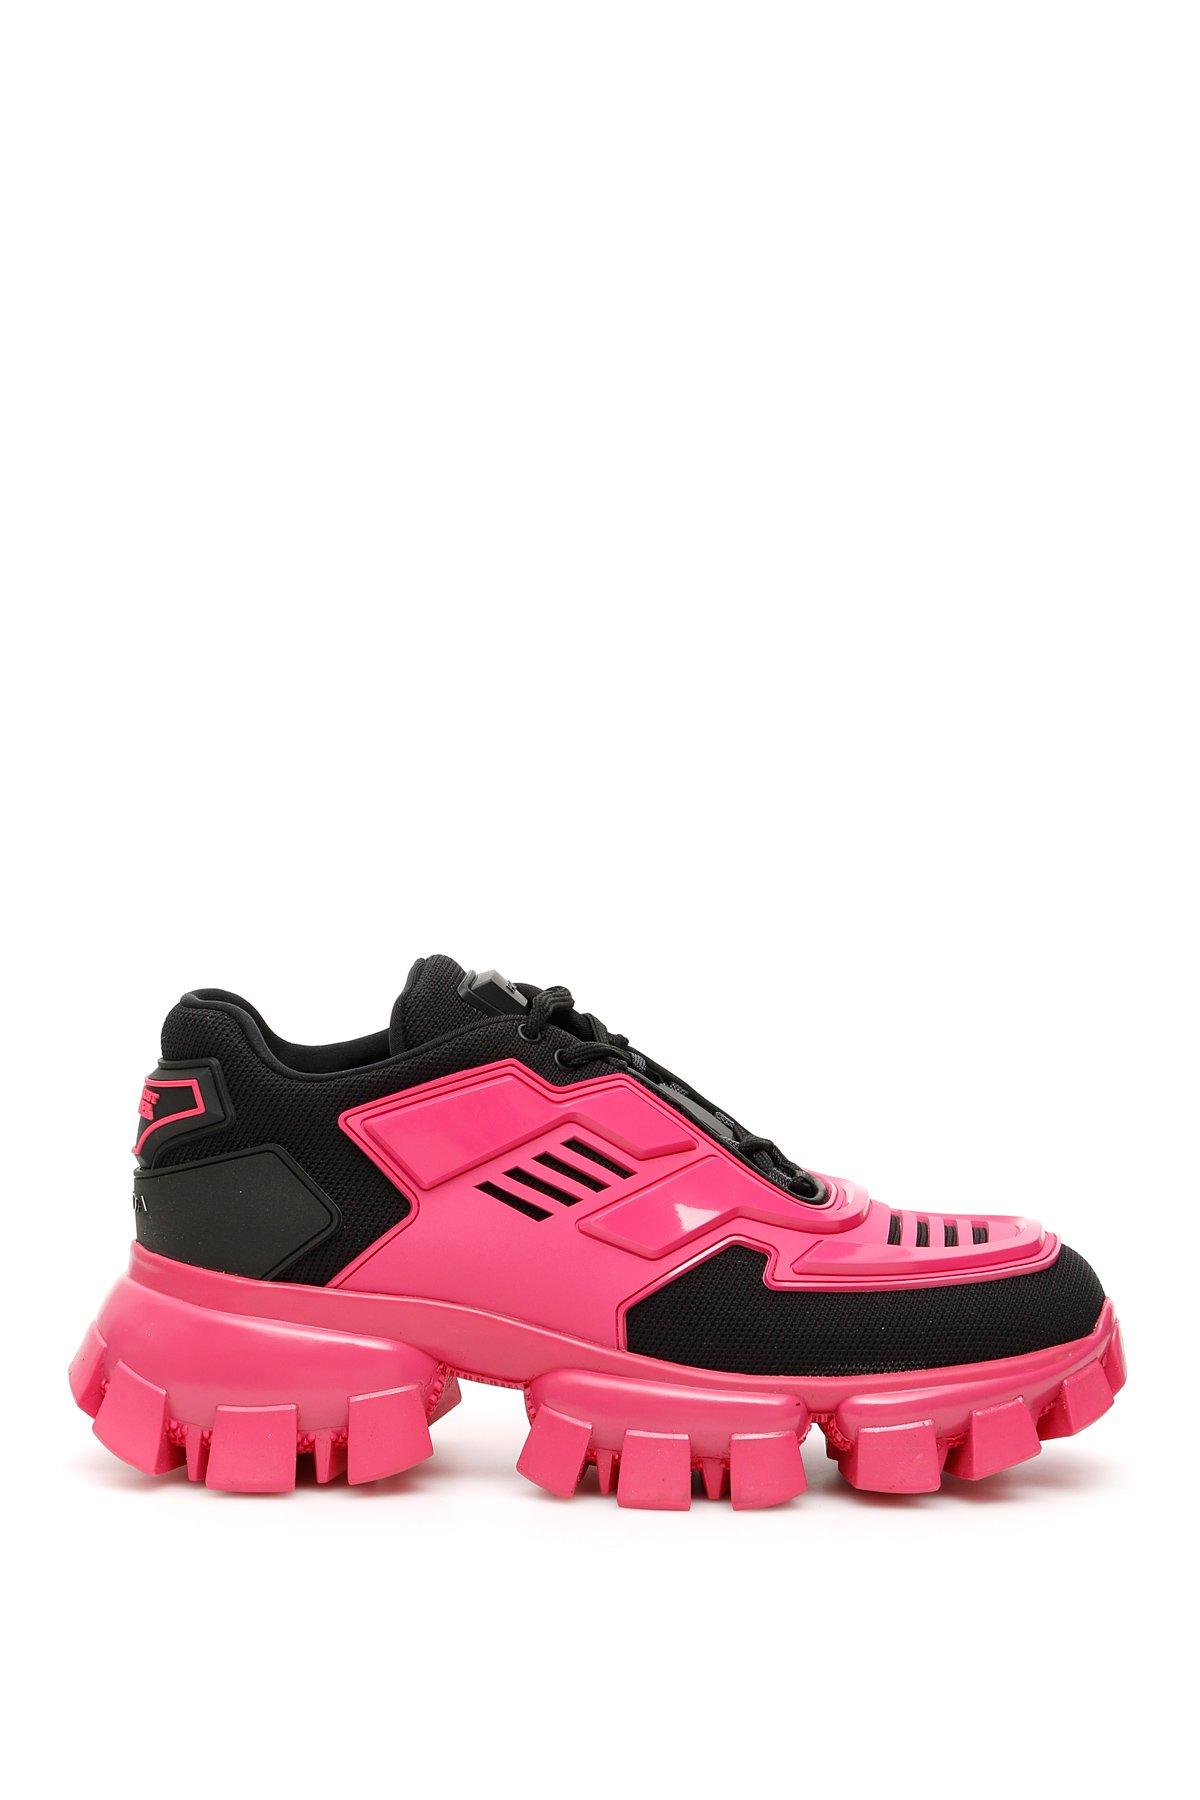 Prada Rubber Cloudburst Thunder Panelled Sneakers in Black,Fuchsia,Pink  (Pink) | Lyst